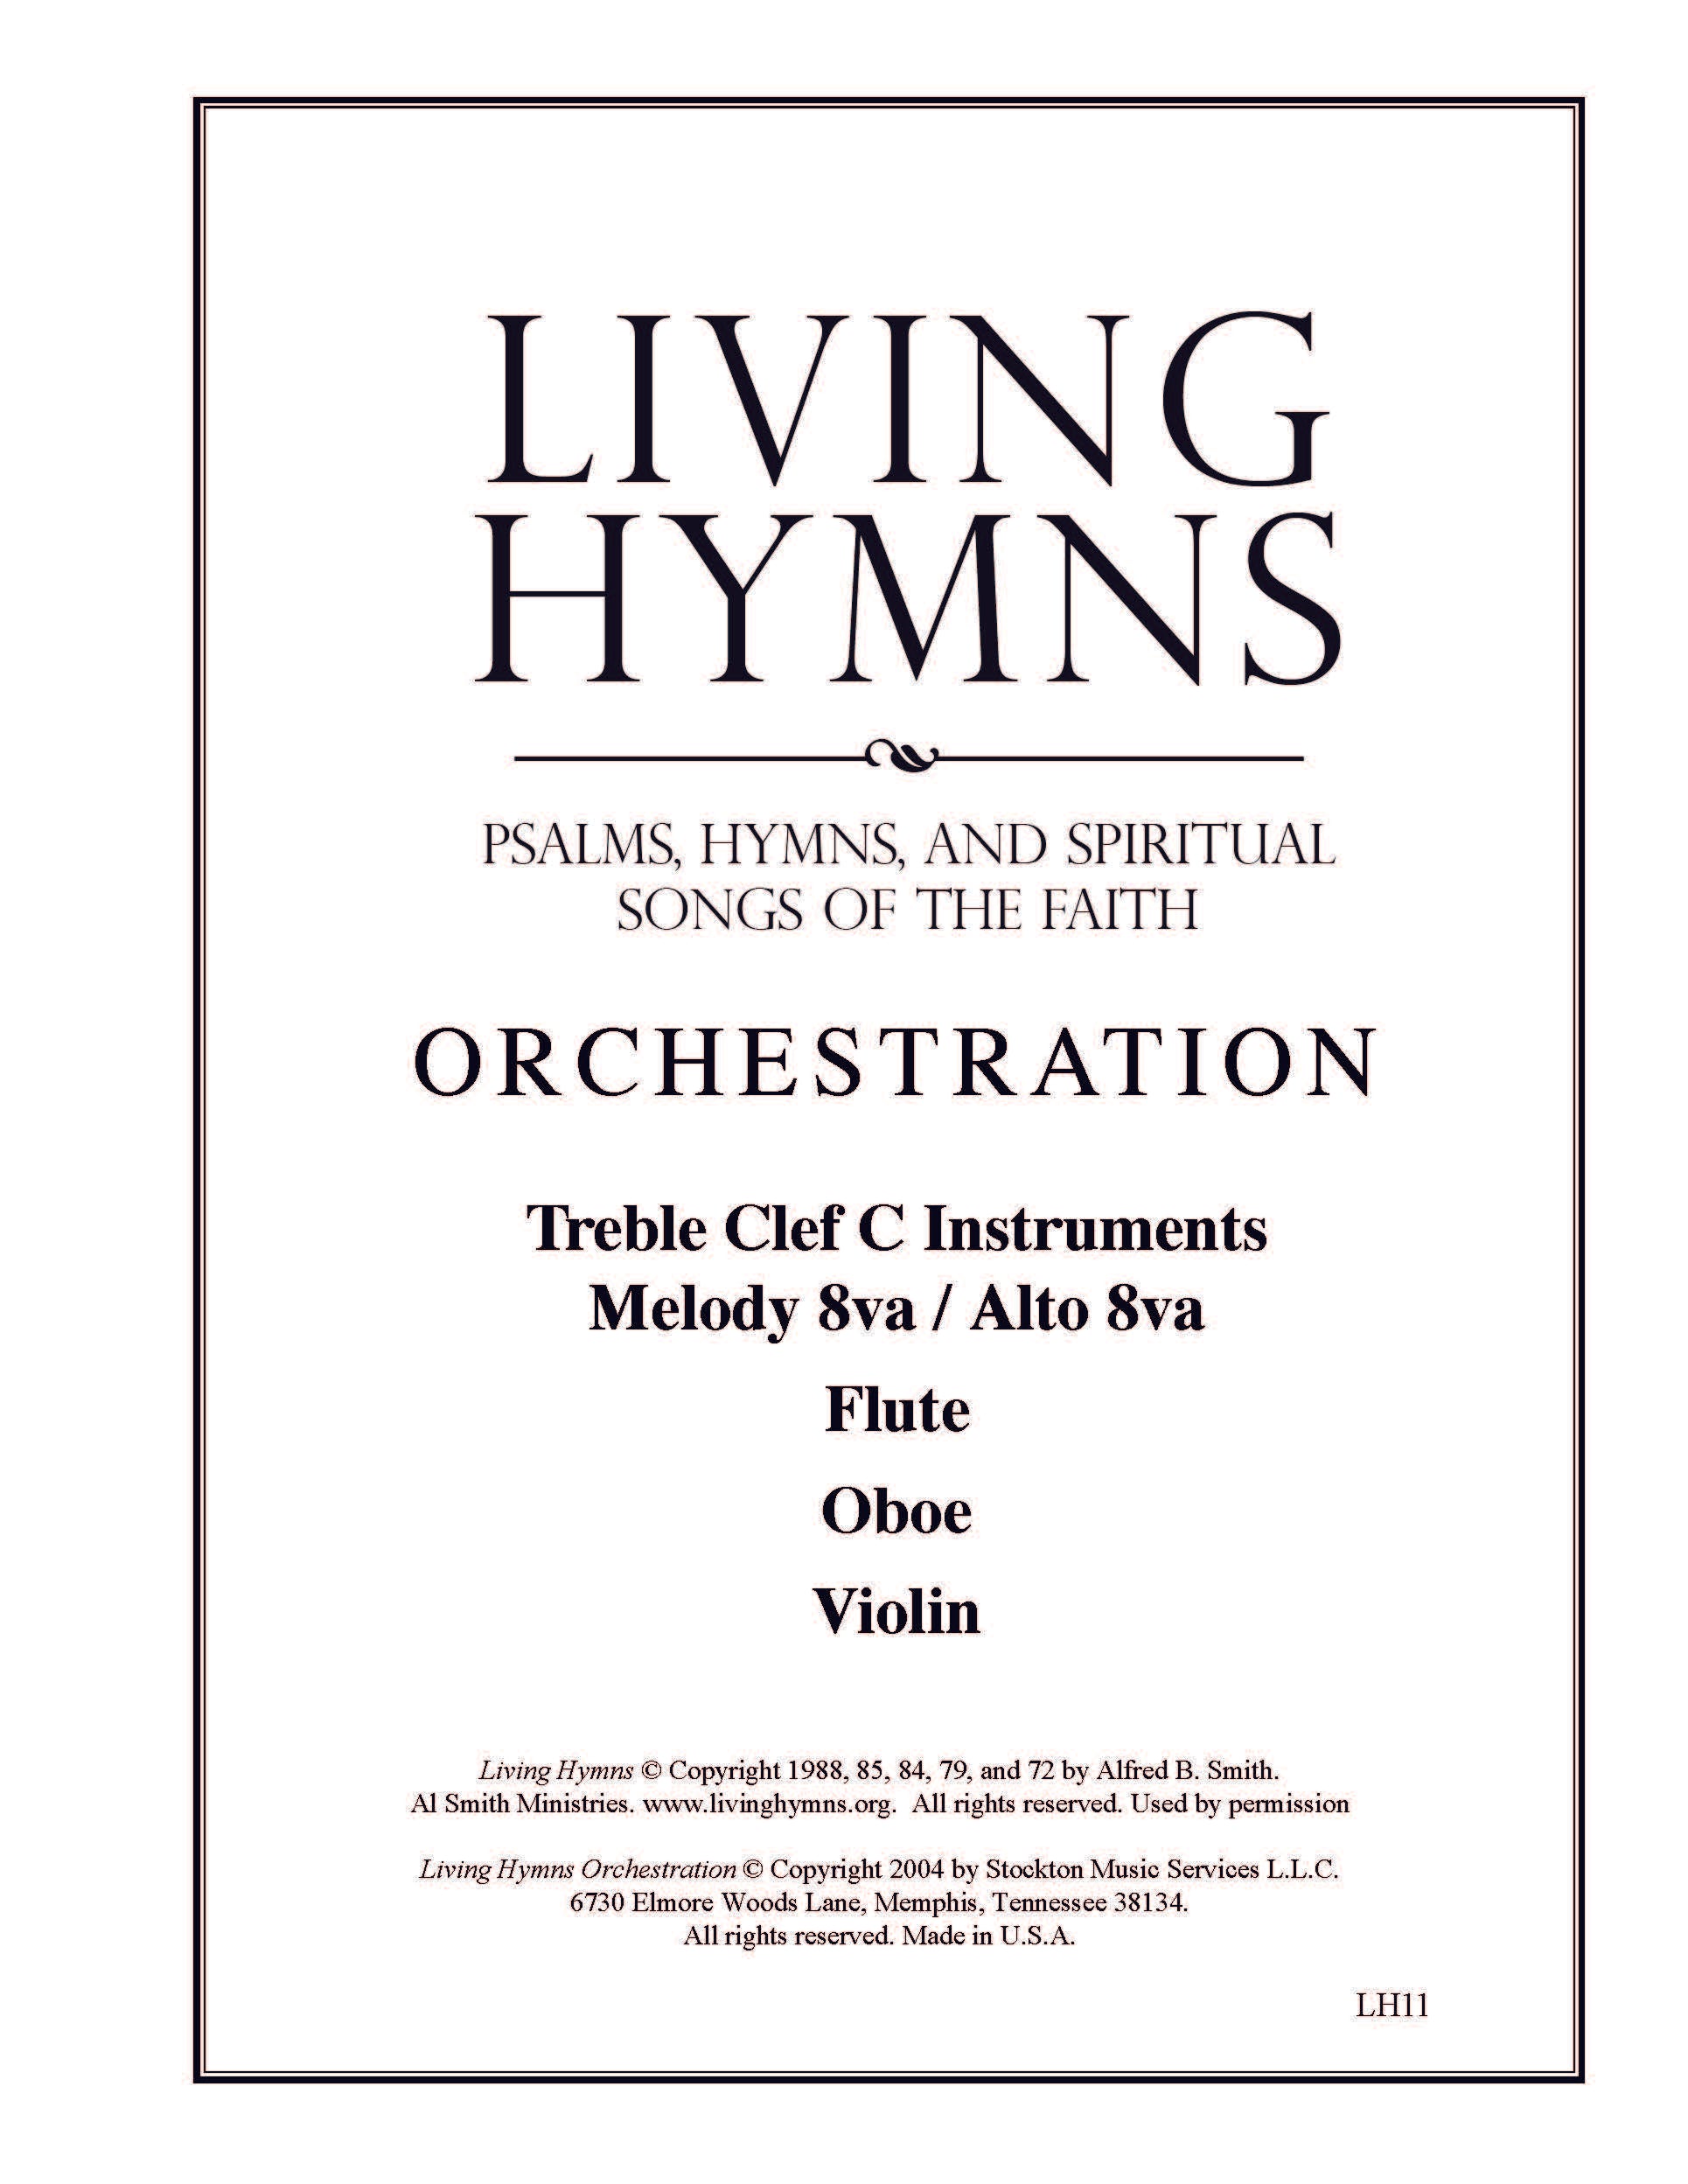 Living Hymns Orchestration: LH11  C (Flute, Oboe, Violin)